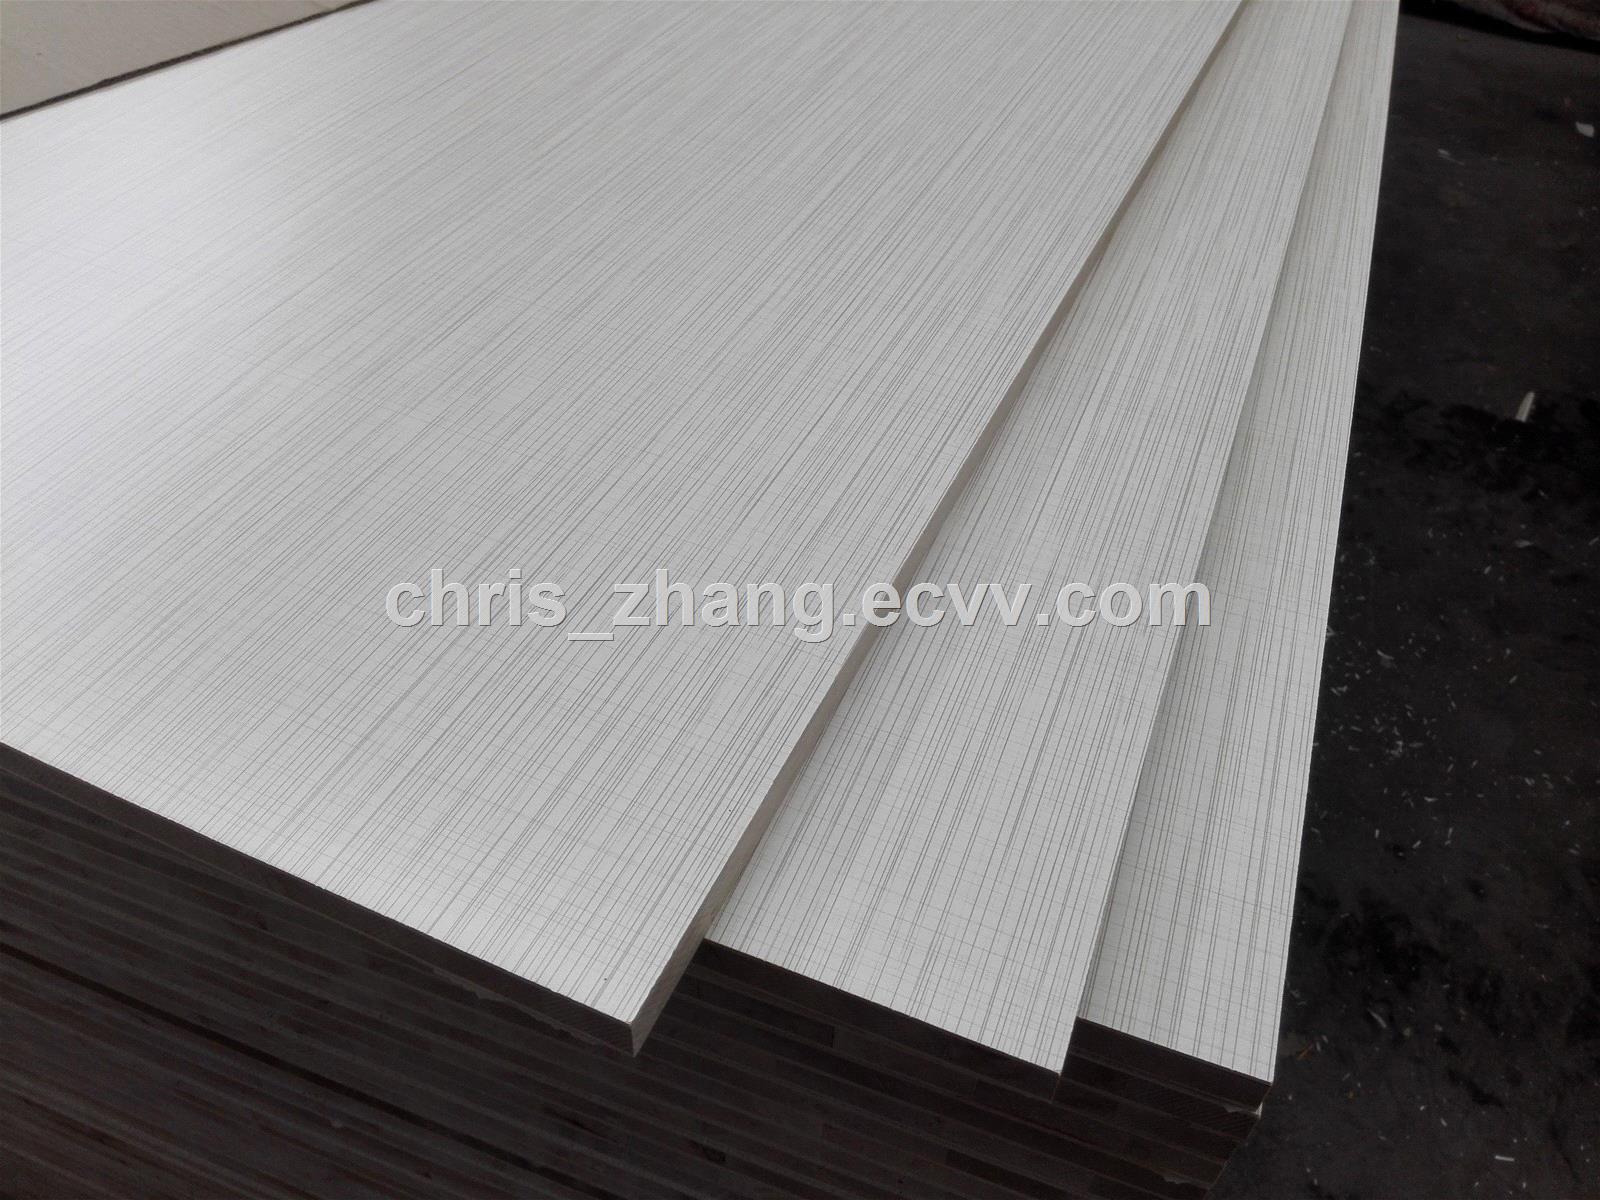 Melamine laminated plywoodMelamine Faced Particle Board